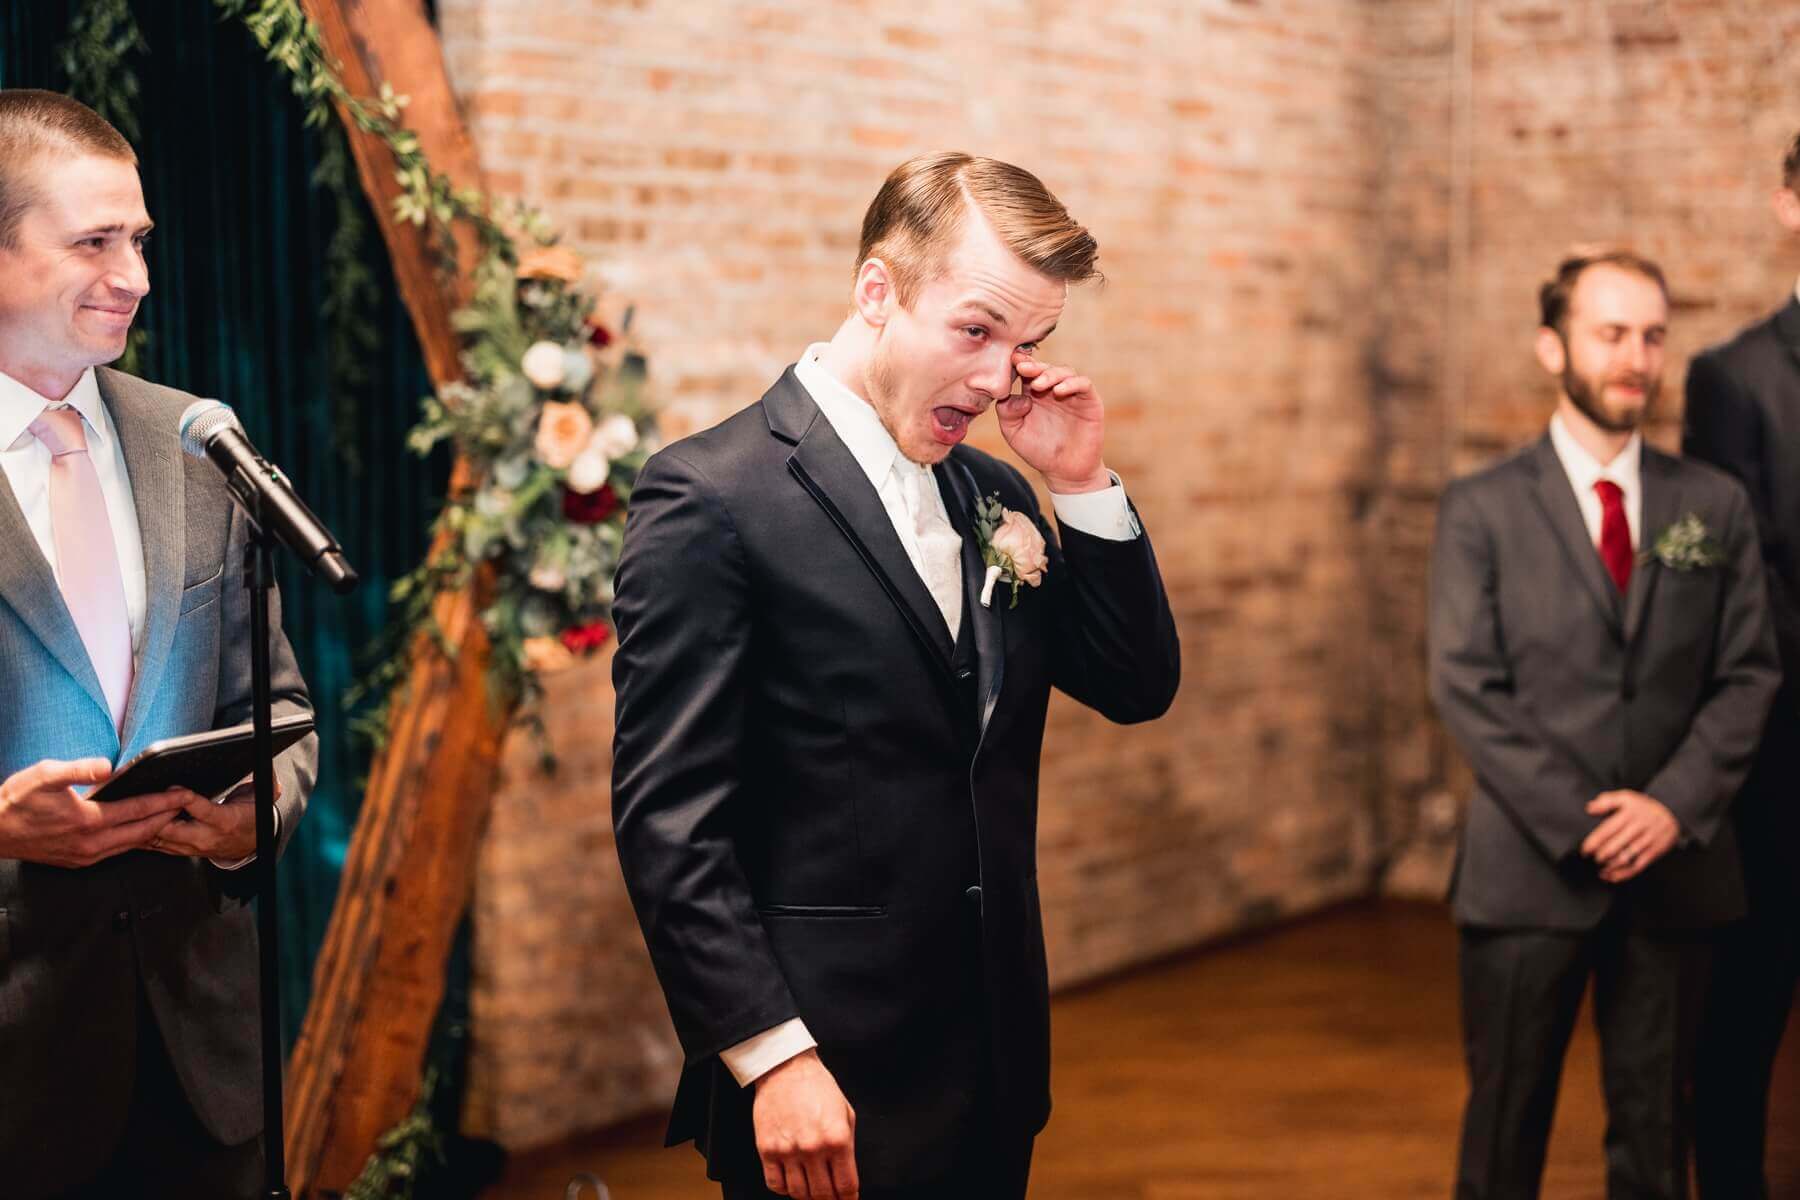 Groom wiping tears from his eyes as bride walks down the aisle